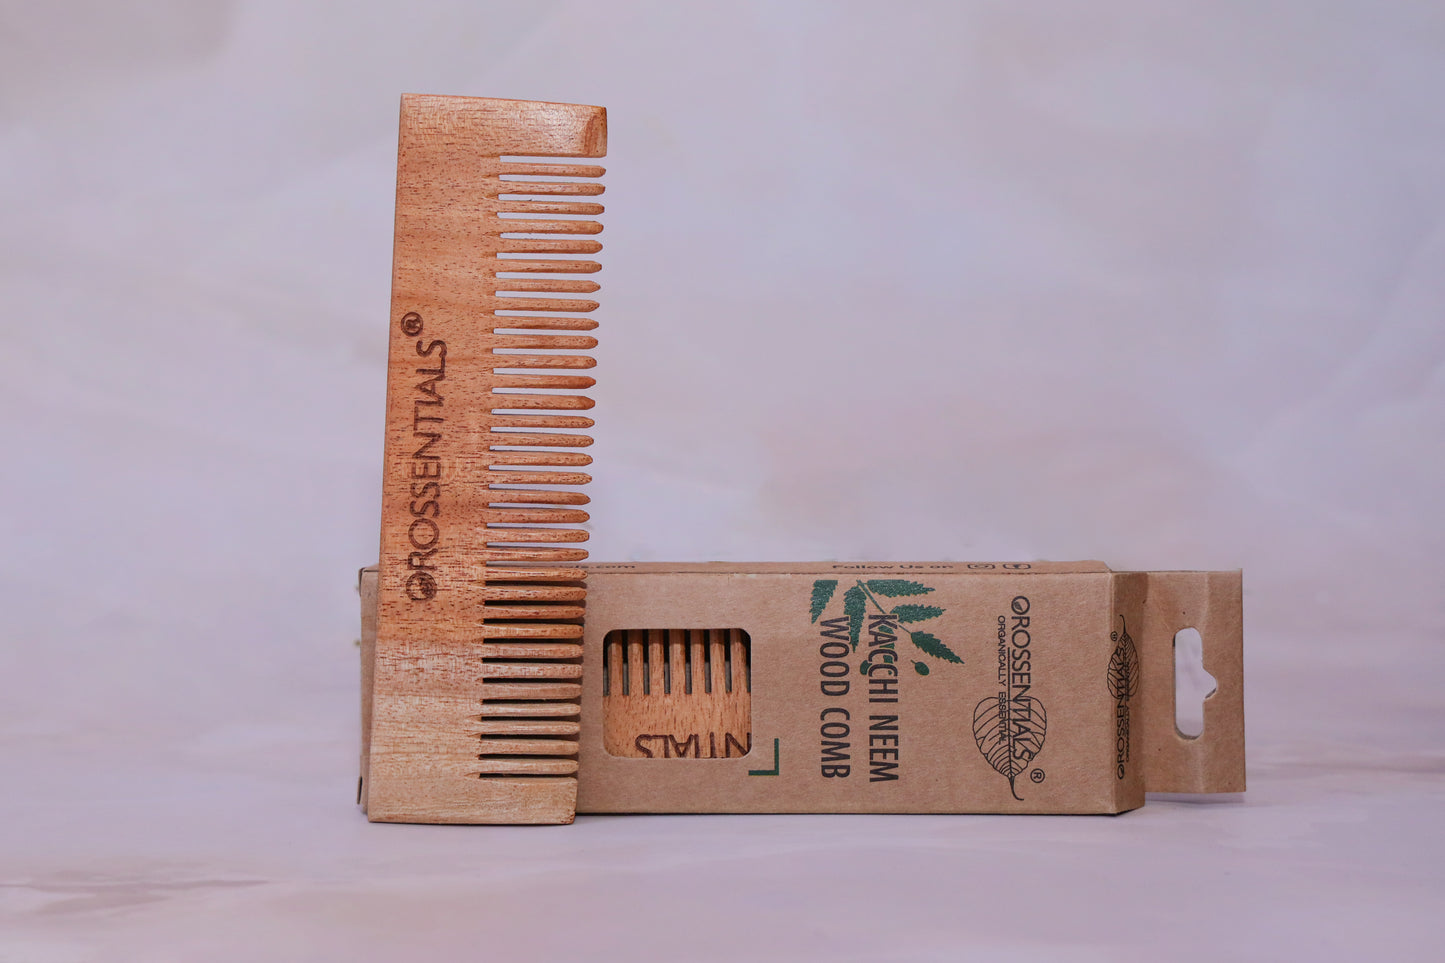 Neem Wooden Comb - Pocket (pack of 2)